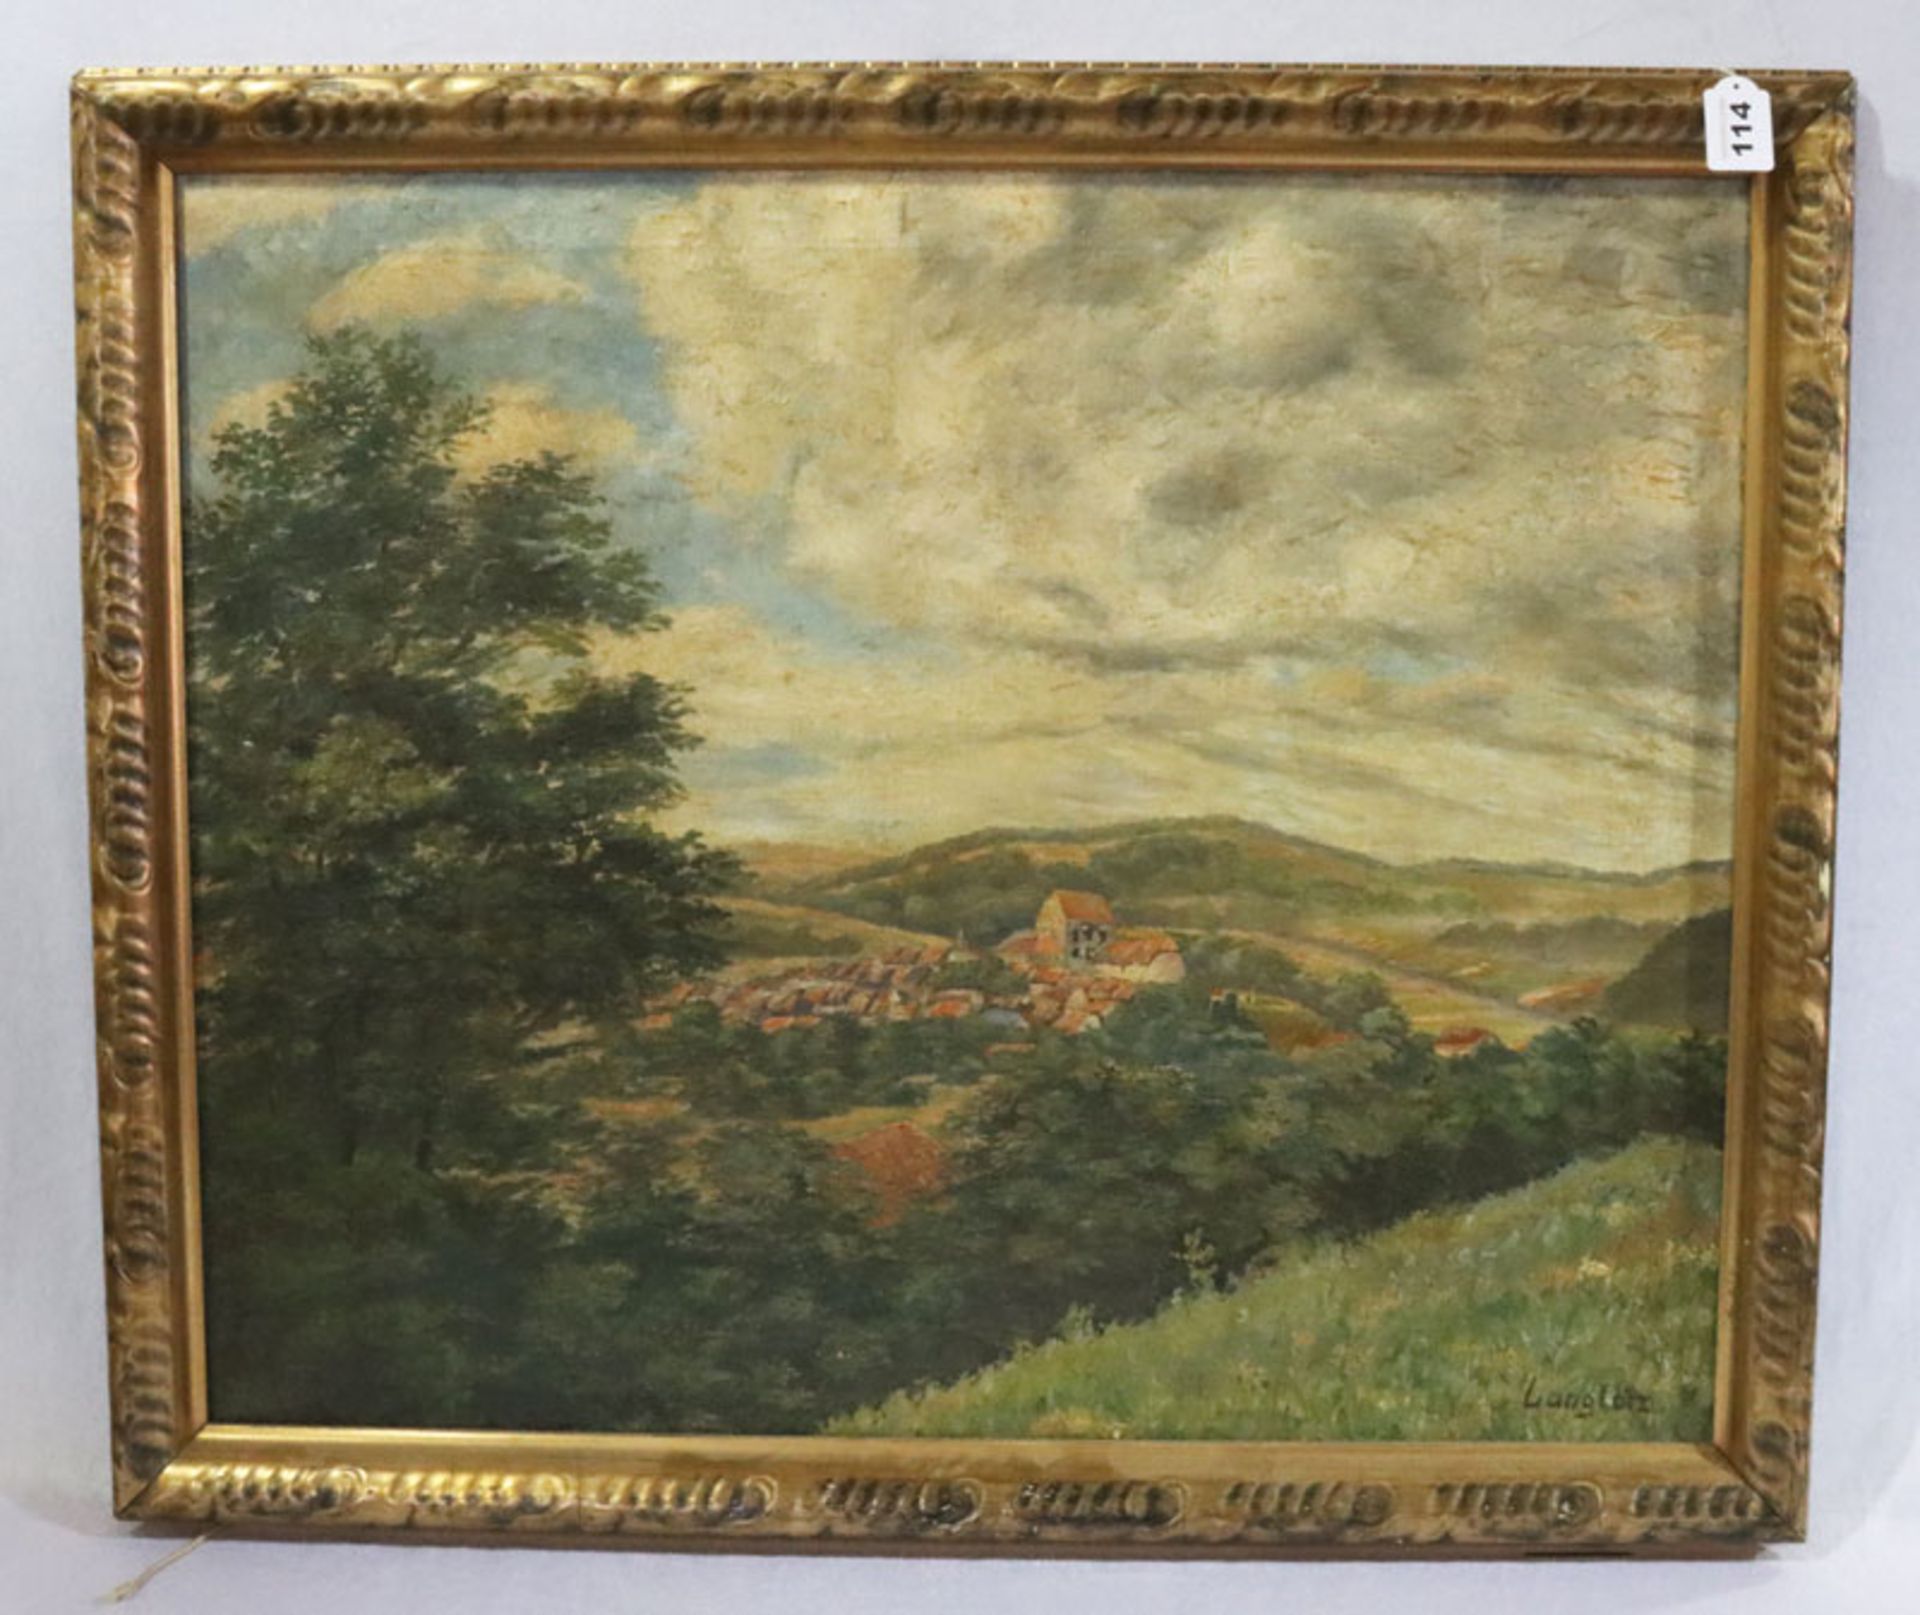 Gemälde ÖL/LW 'Landschafts-Szenerie mit Dorf', signiert Lang Lotz, LW krakelliert, benötigt